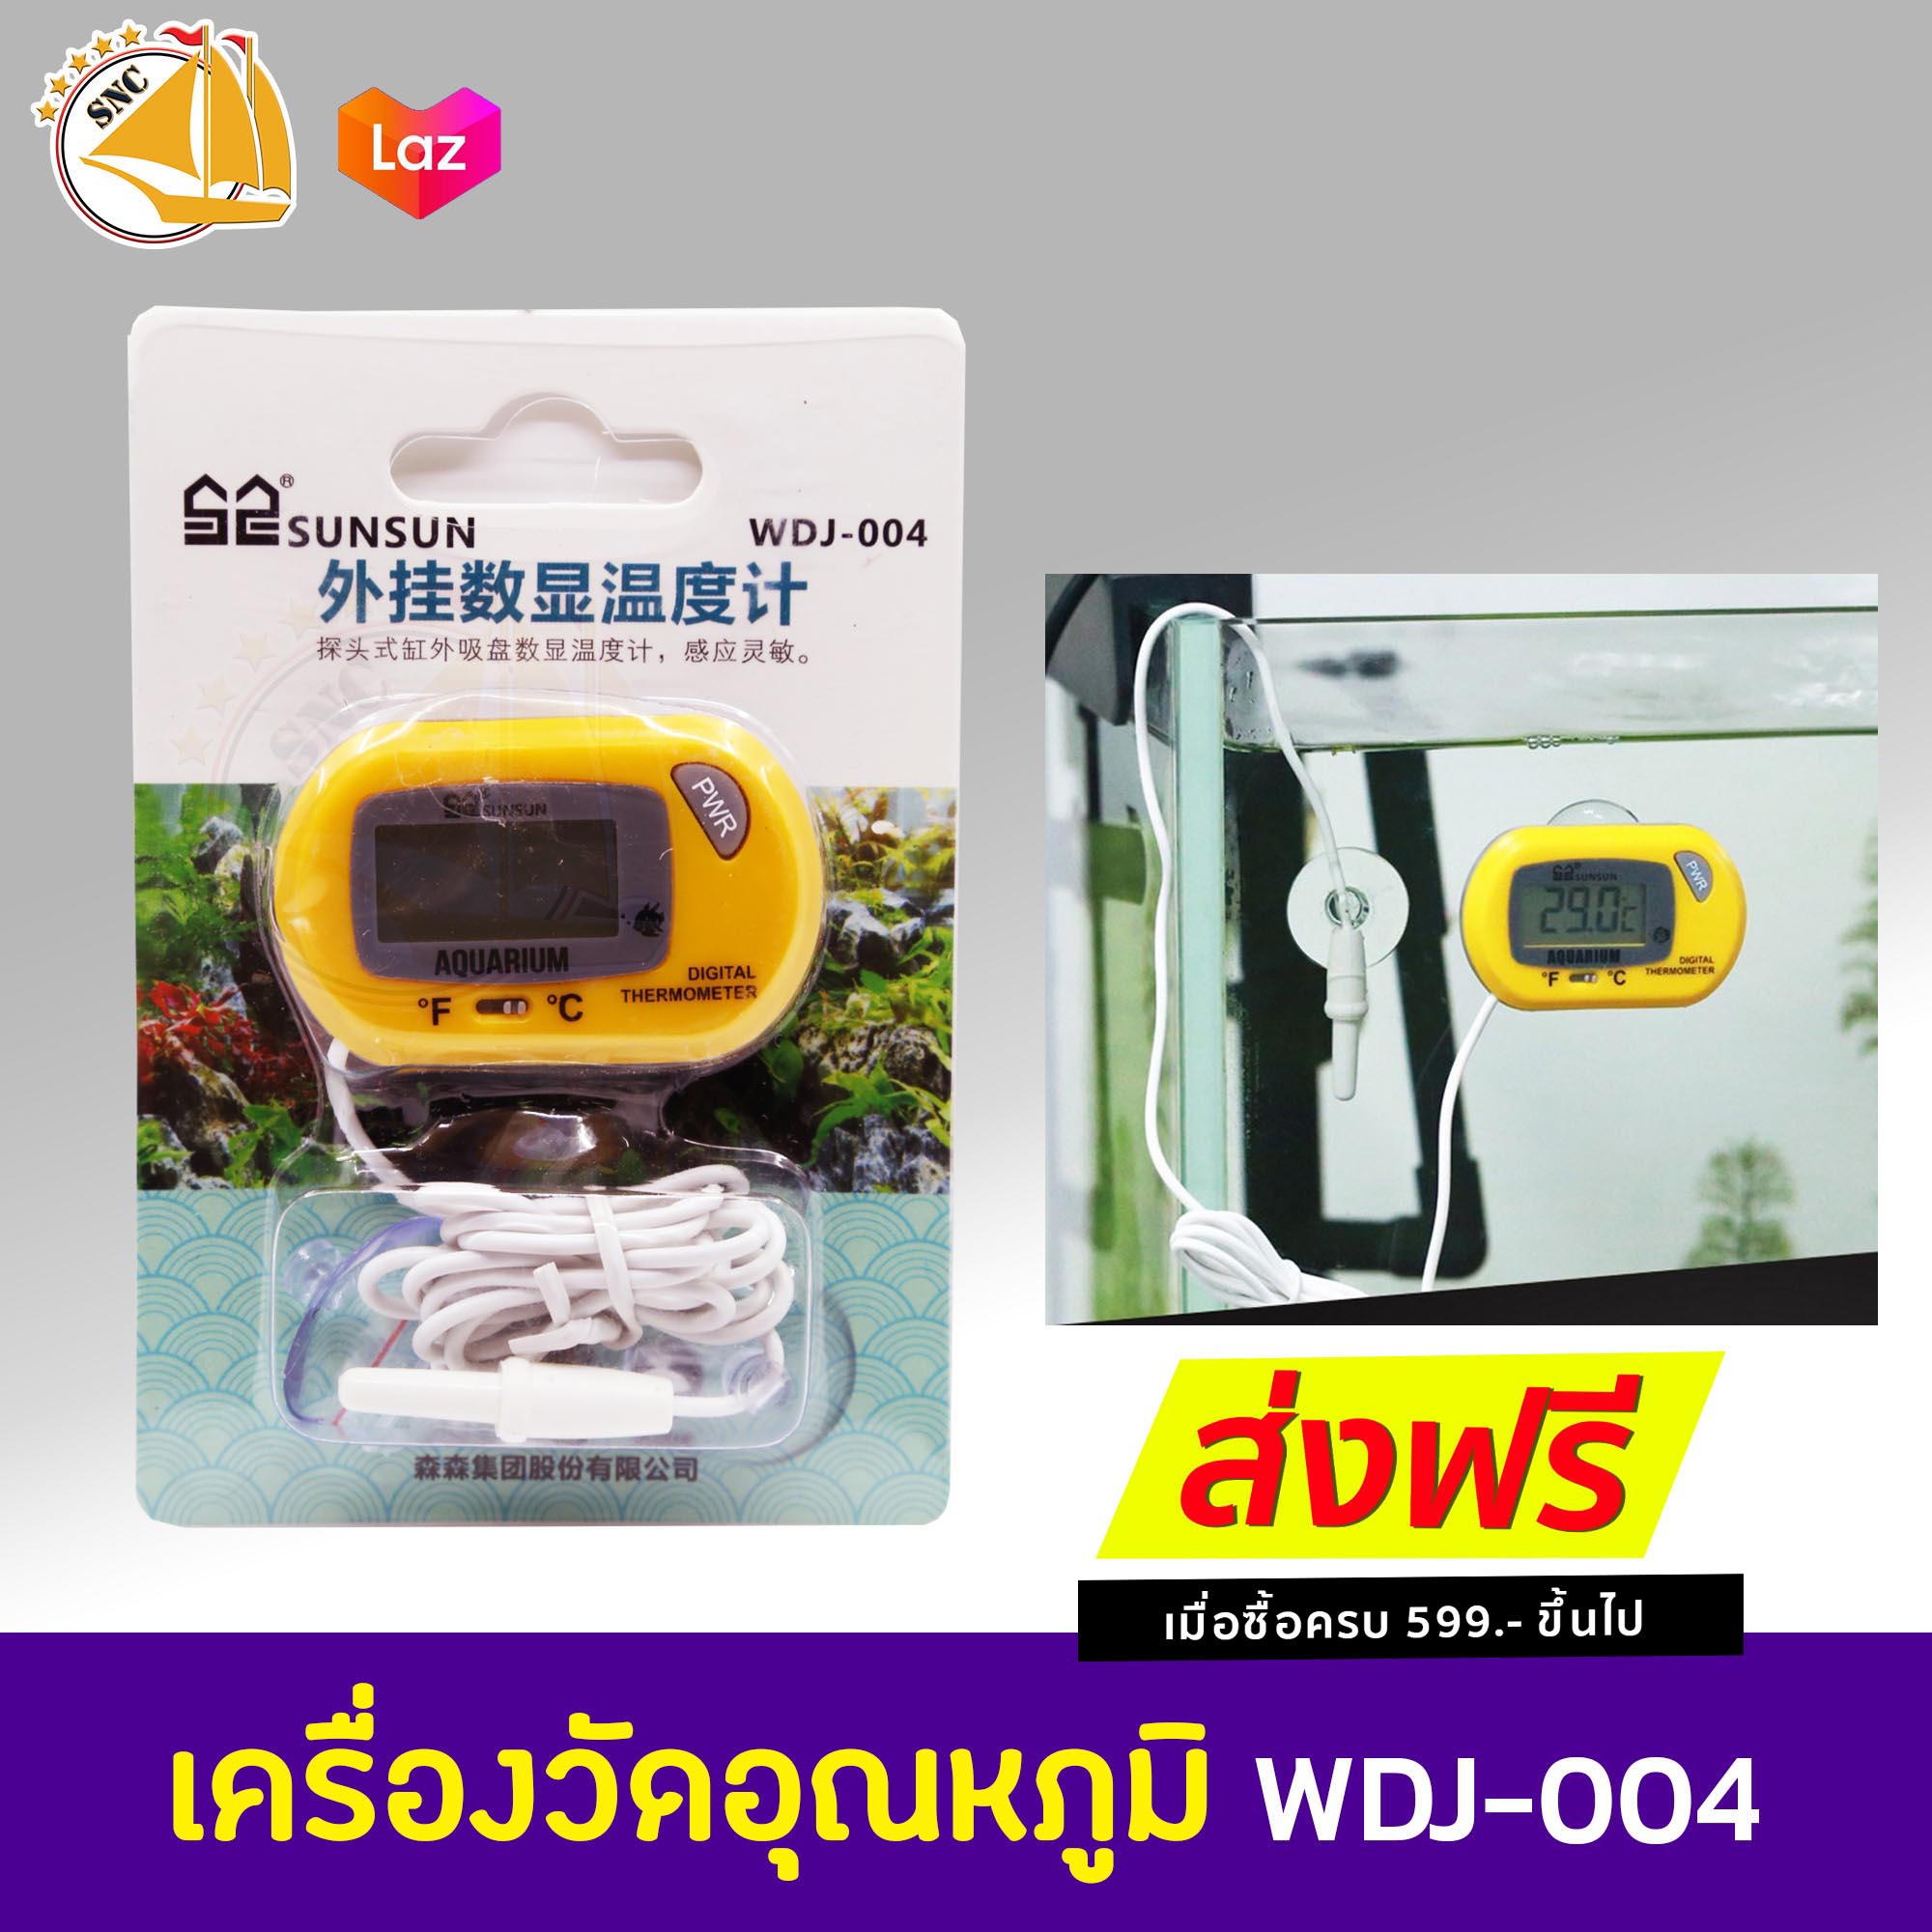 SUNSUN WDJ-004 เครื่องวัดอุณหภูมิตู้ปลา ปรอทดิจิตอล สีเหลือง